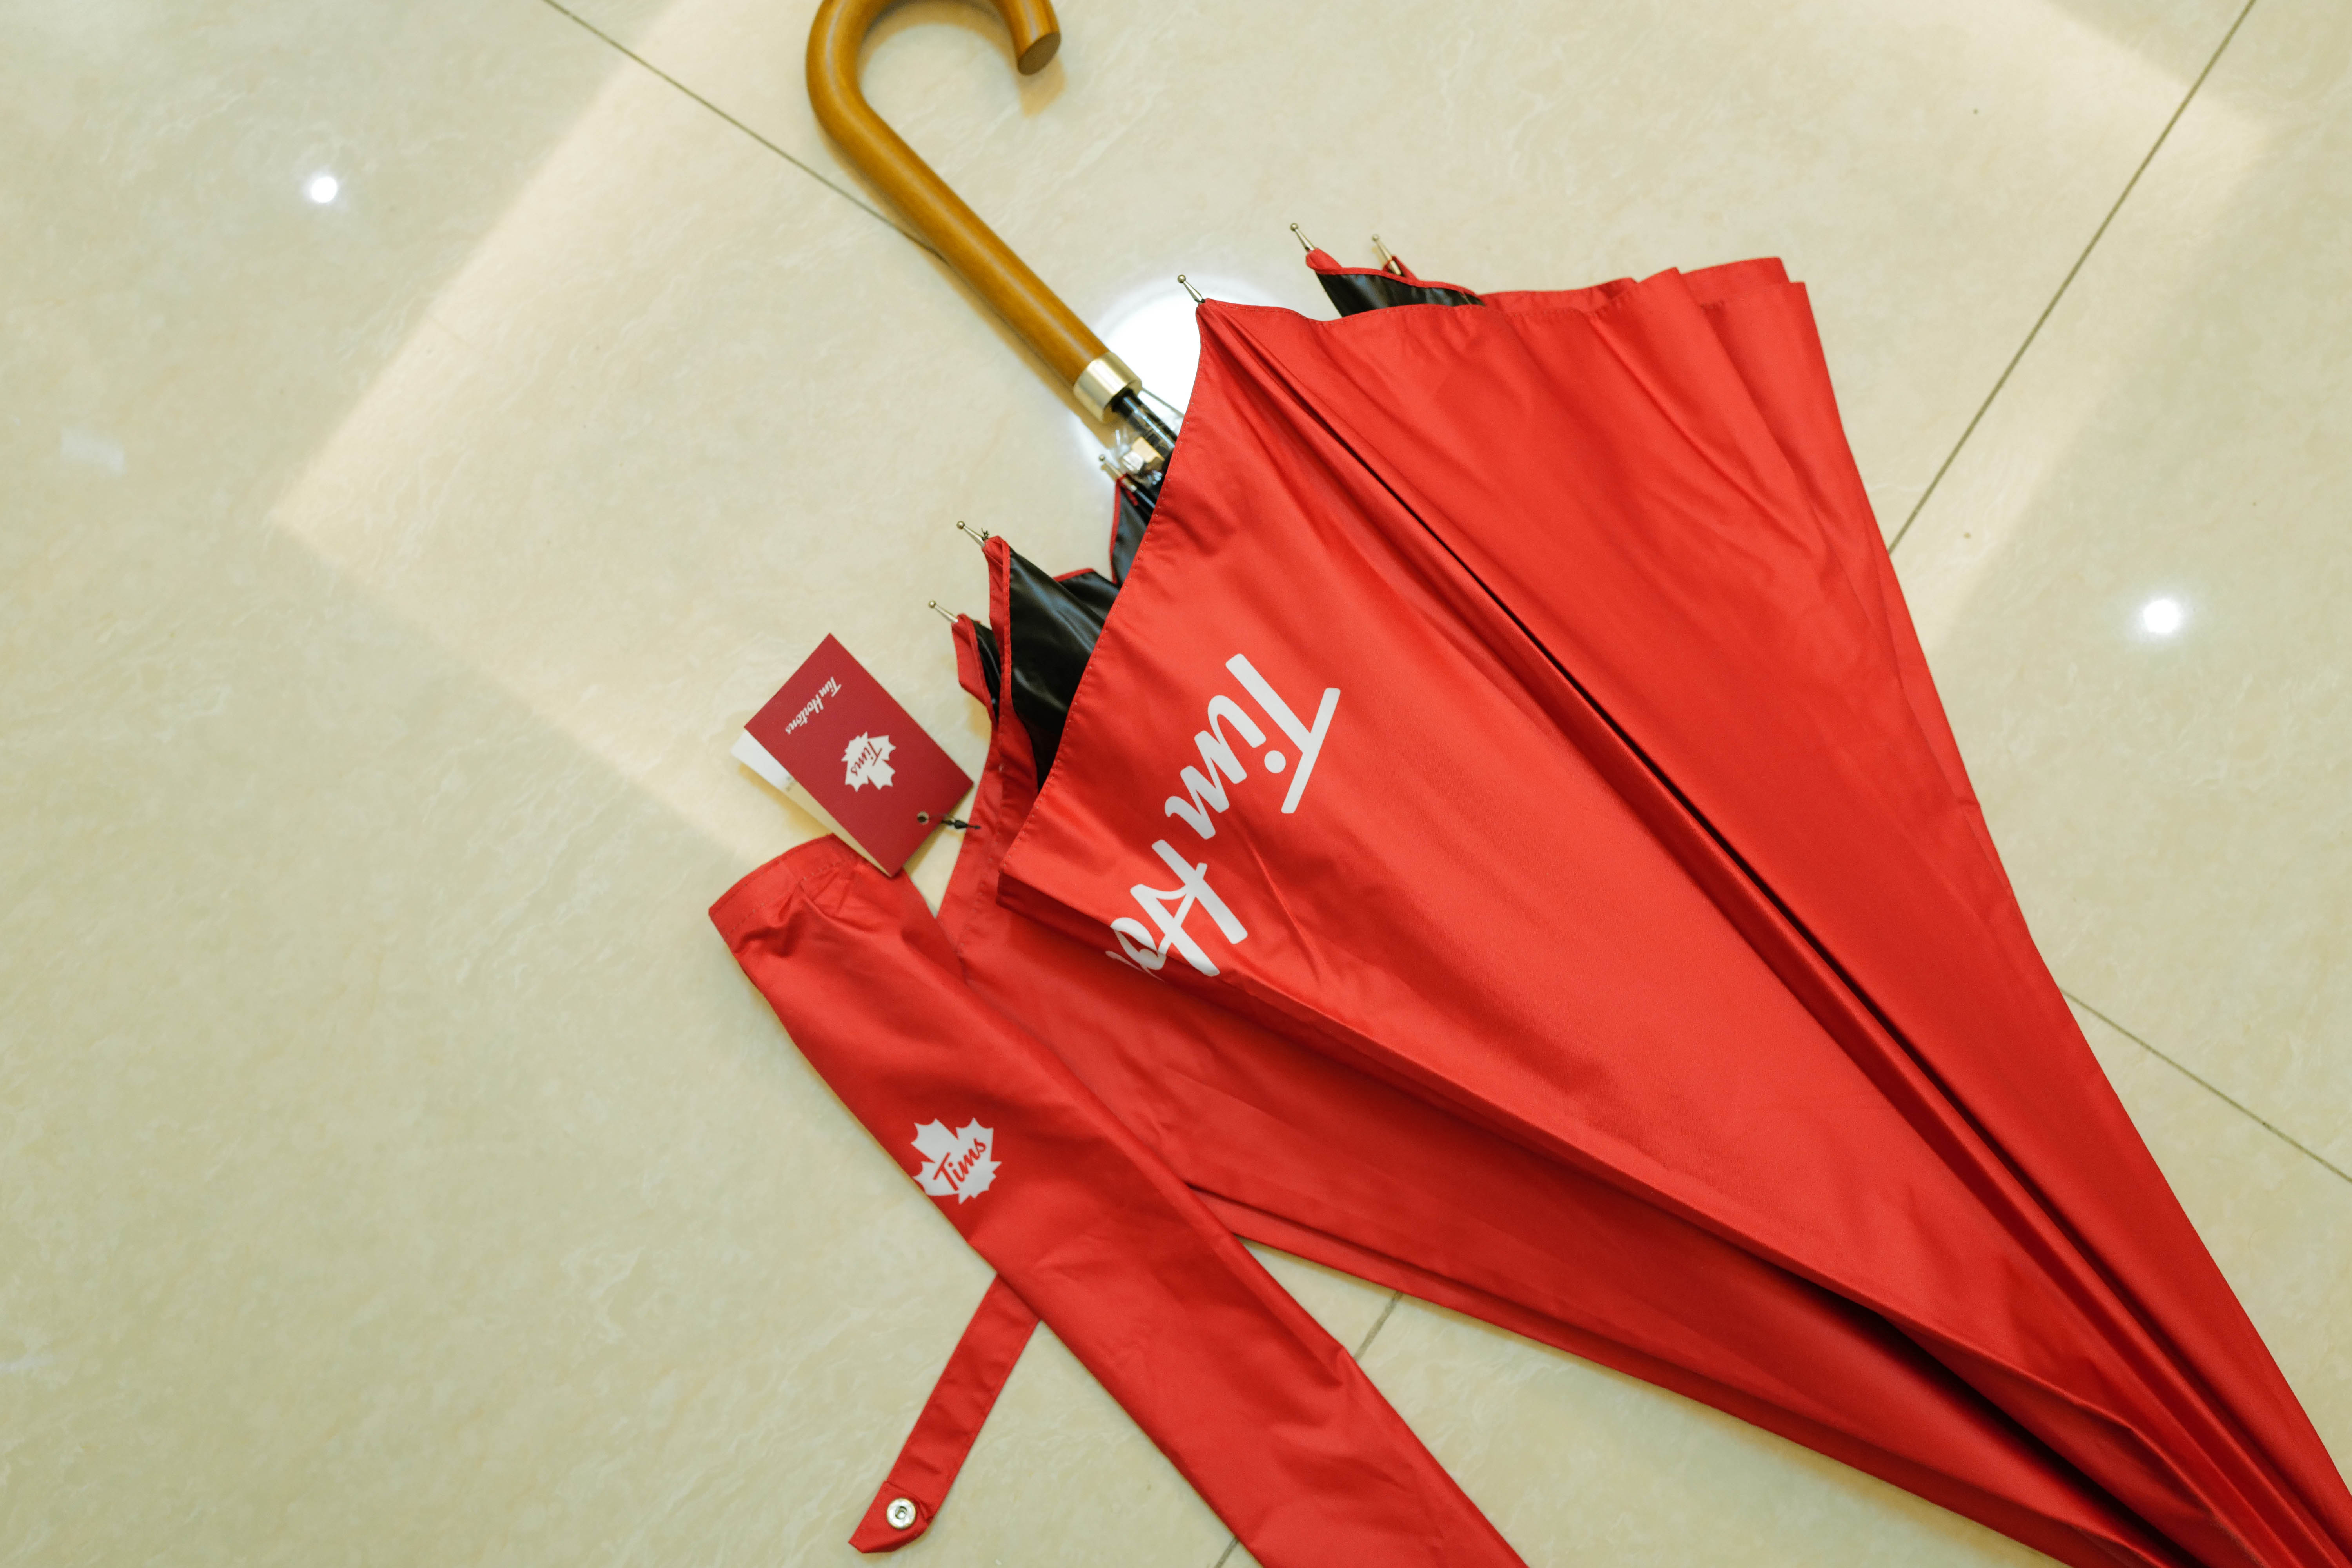 Tims雨伞长柄大红色枫叶logo雨伞木质手柄遮阳防晒伞 赠防尘袋